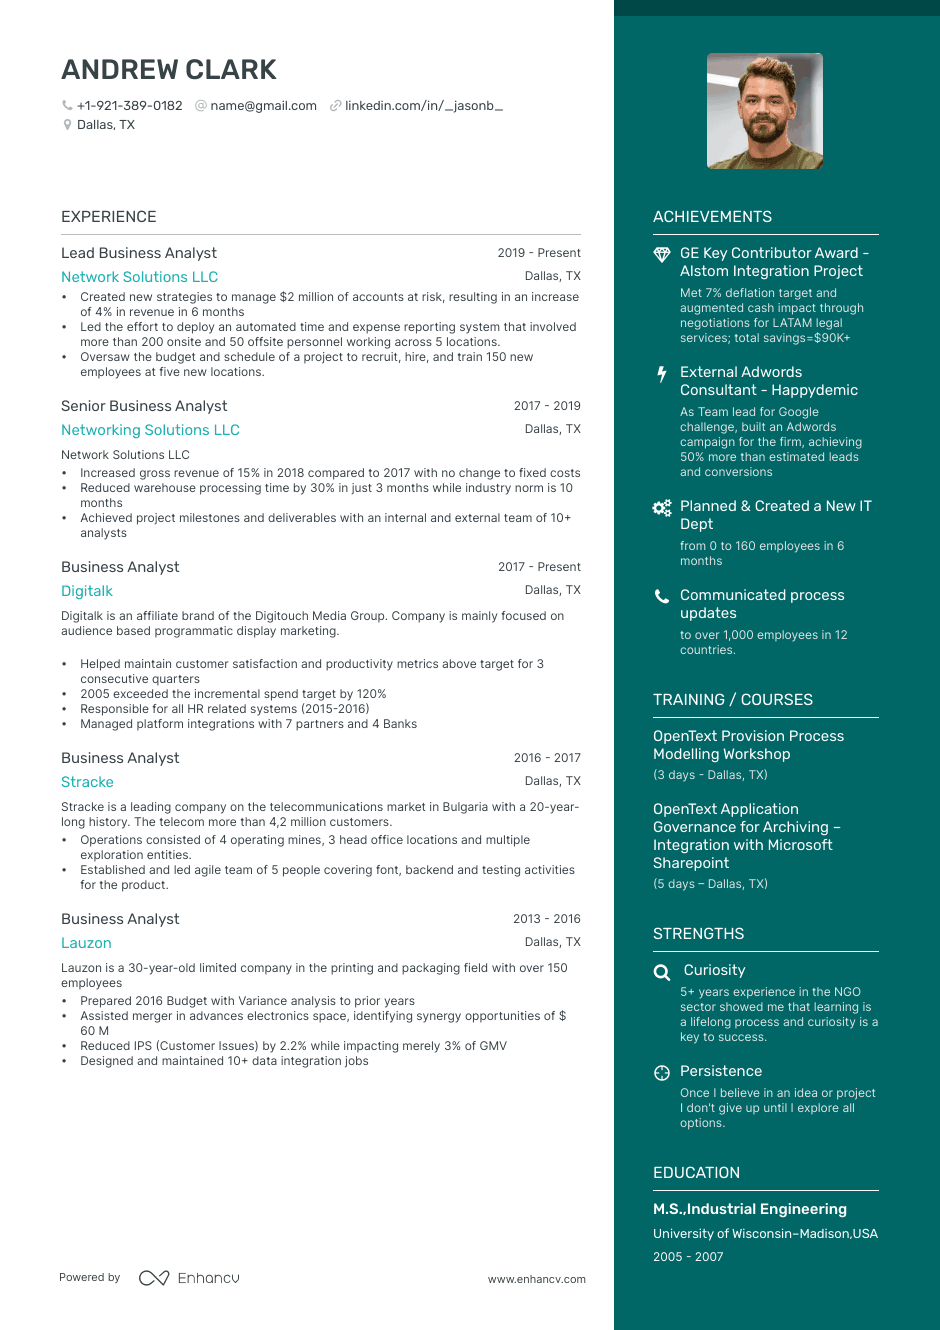 Business Analyst resume